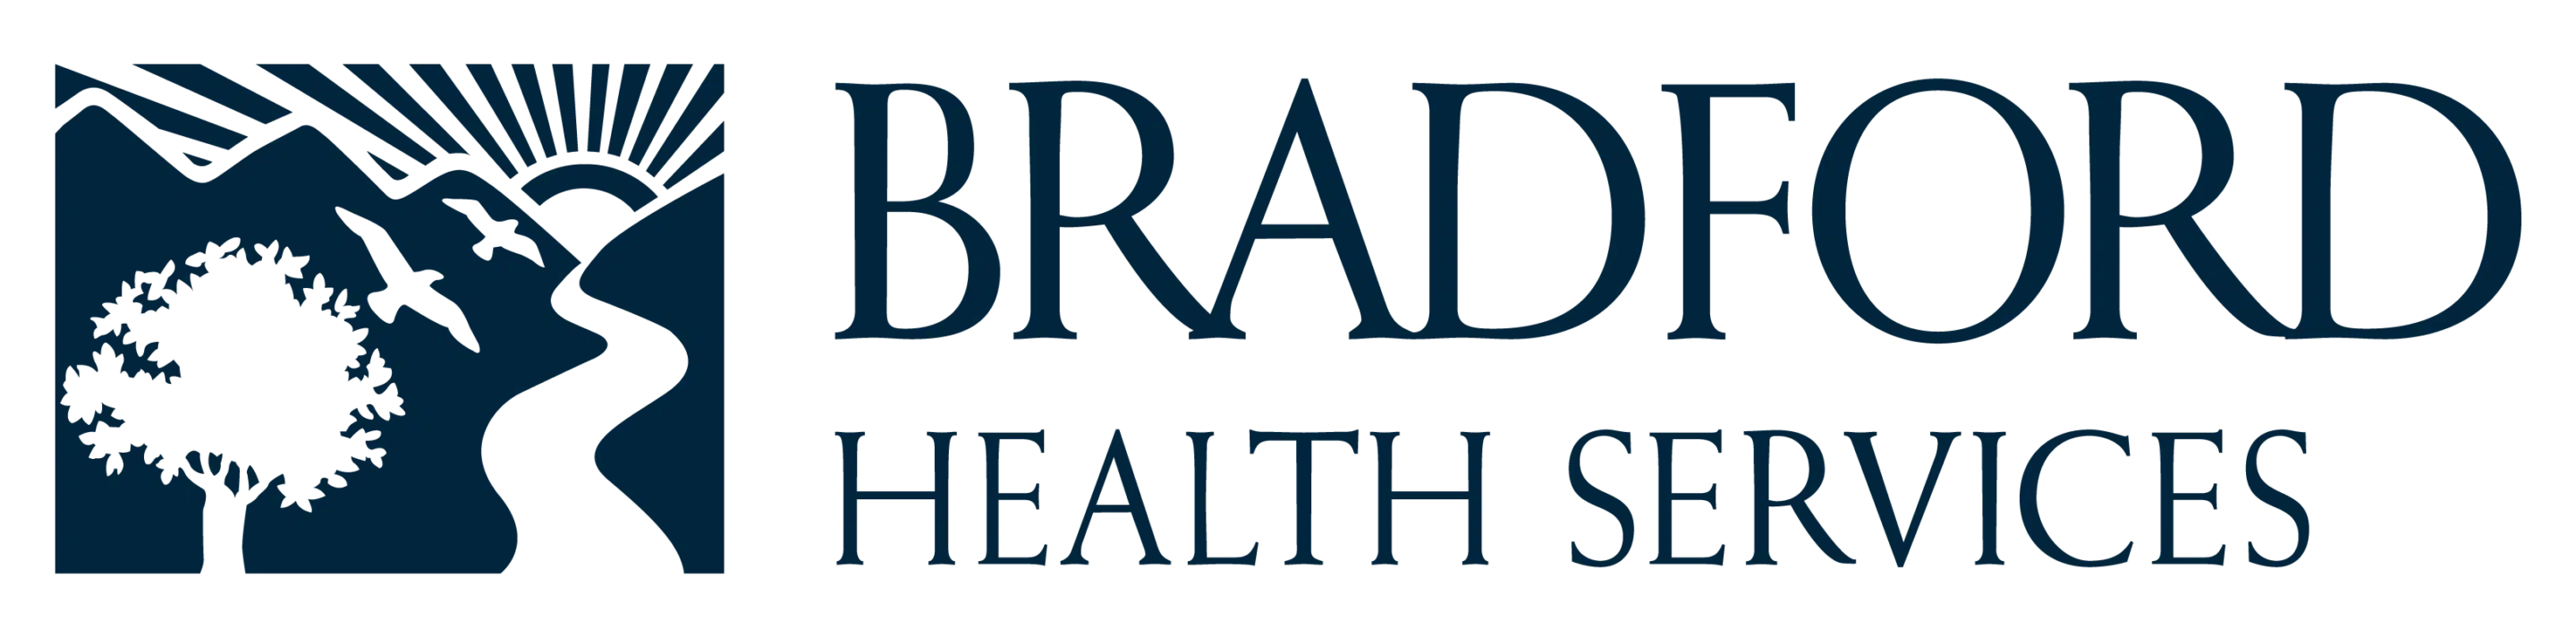 bradford health drug rehab logo horizontal navy